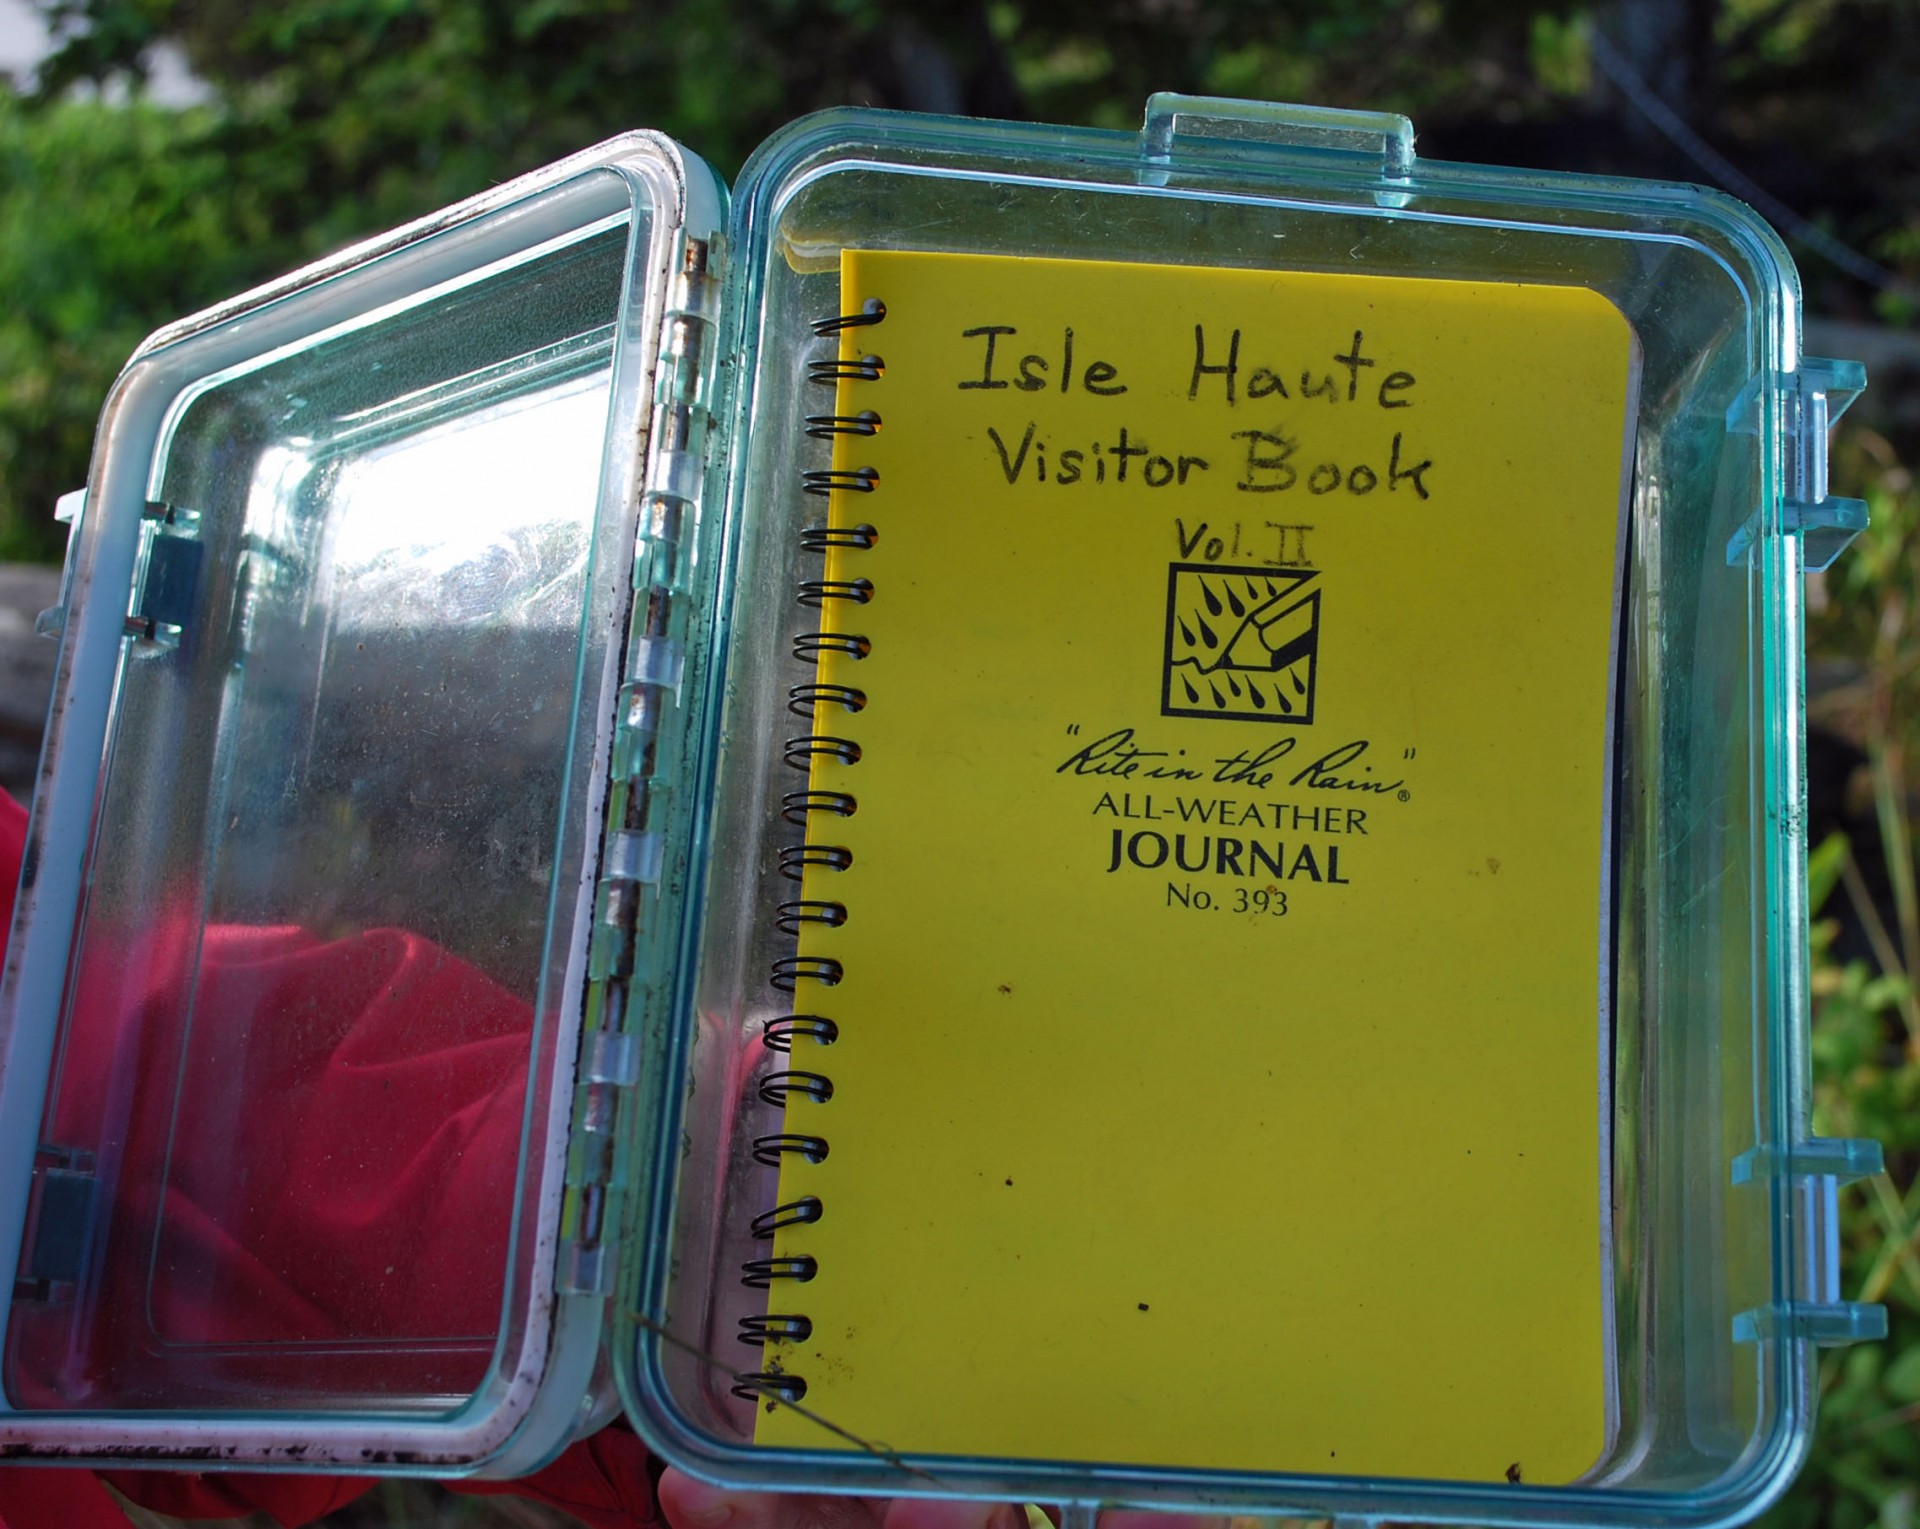 Isle Haute Visitor Book